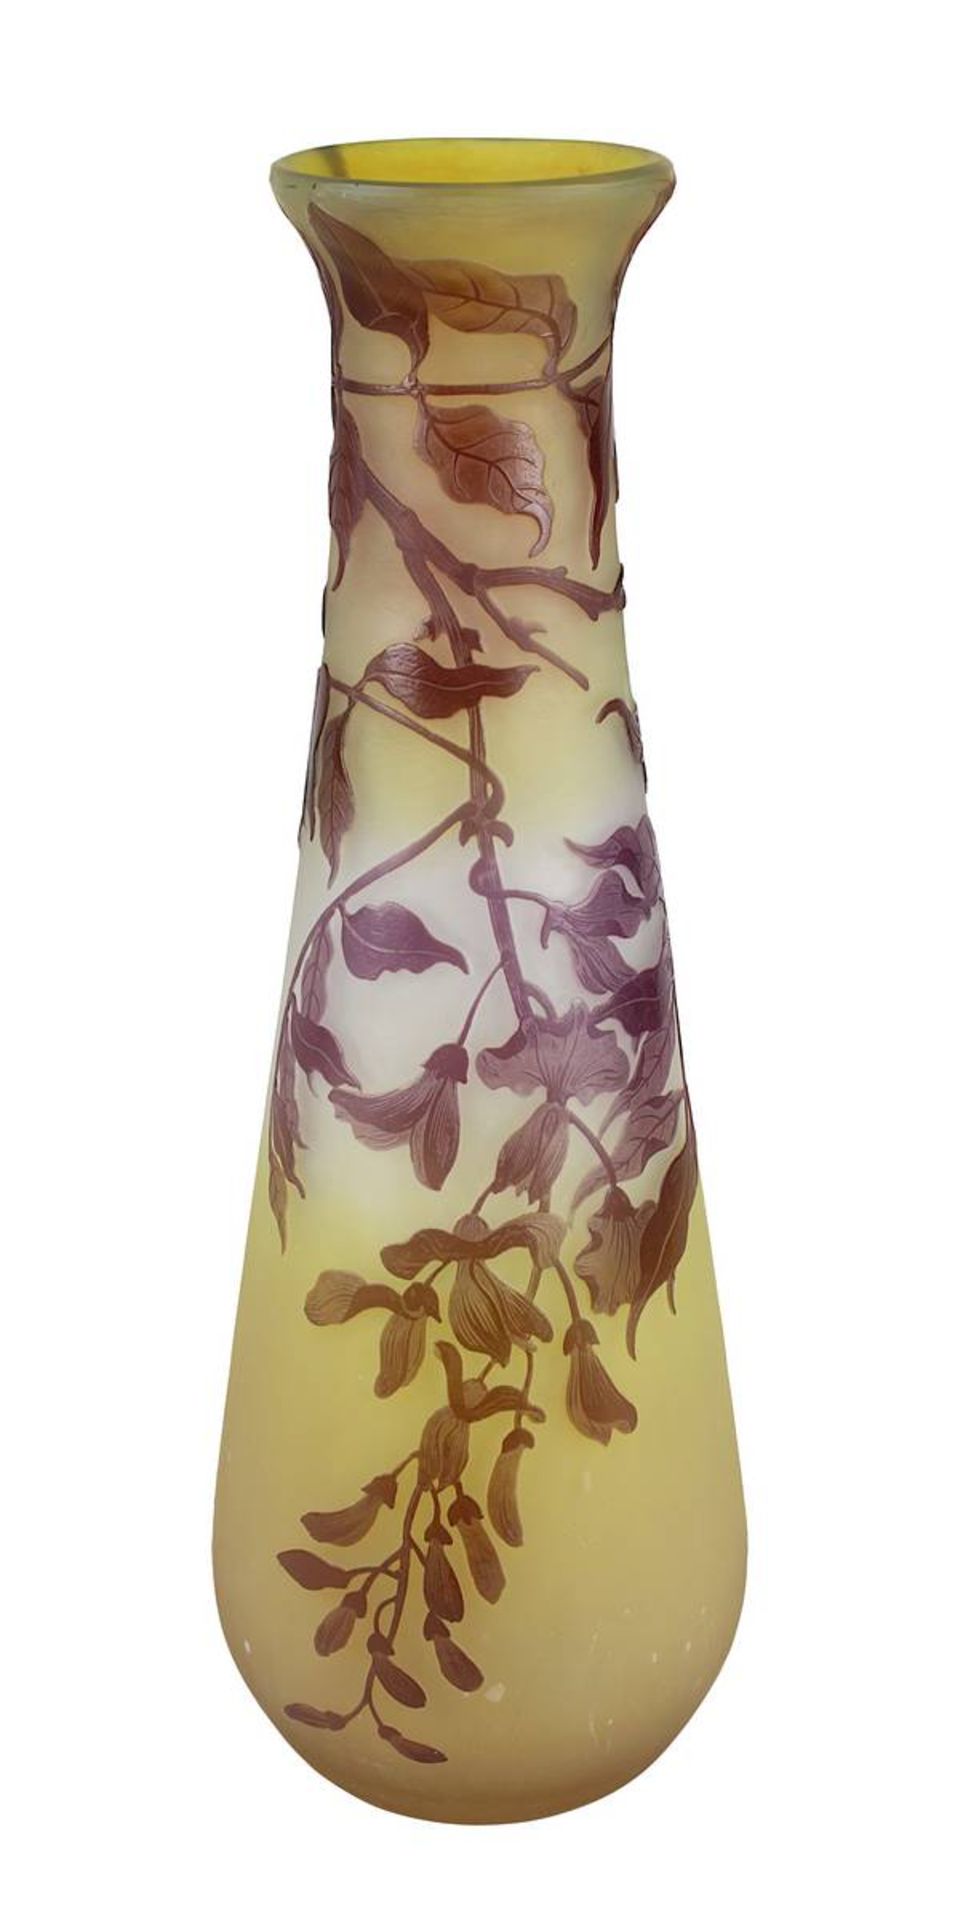 Gallé Jugendstil-Vase mit Glyziniendekor, Nancy 1904-1906, keulenförmiger Klarglaskorpus innen mit